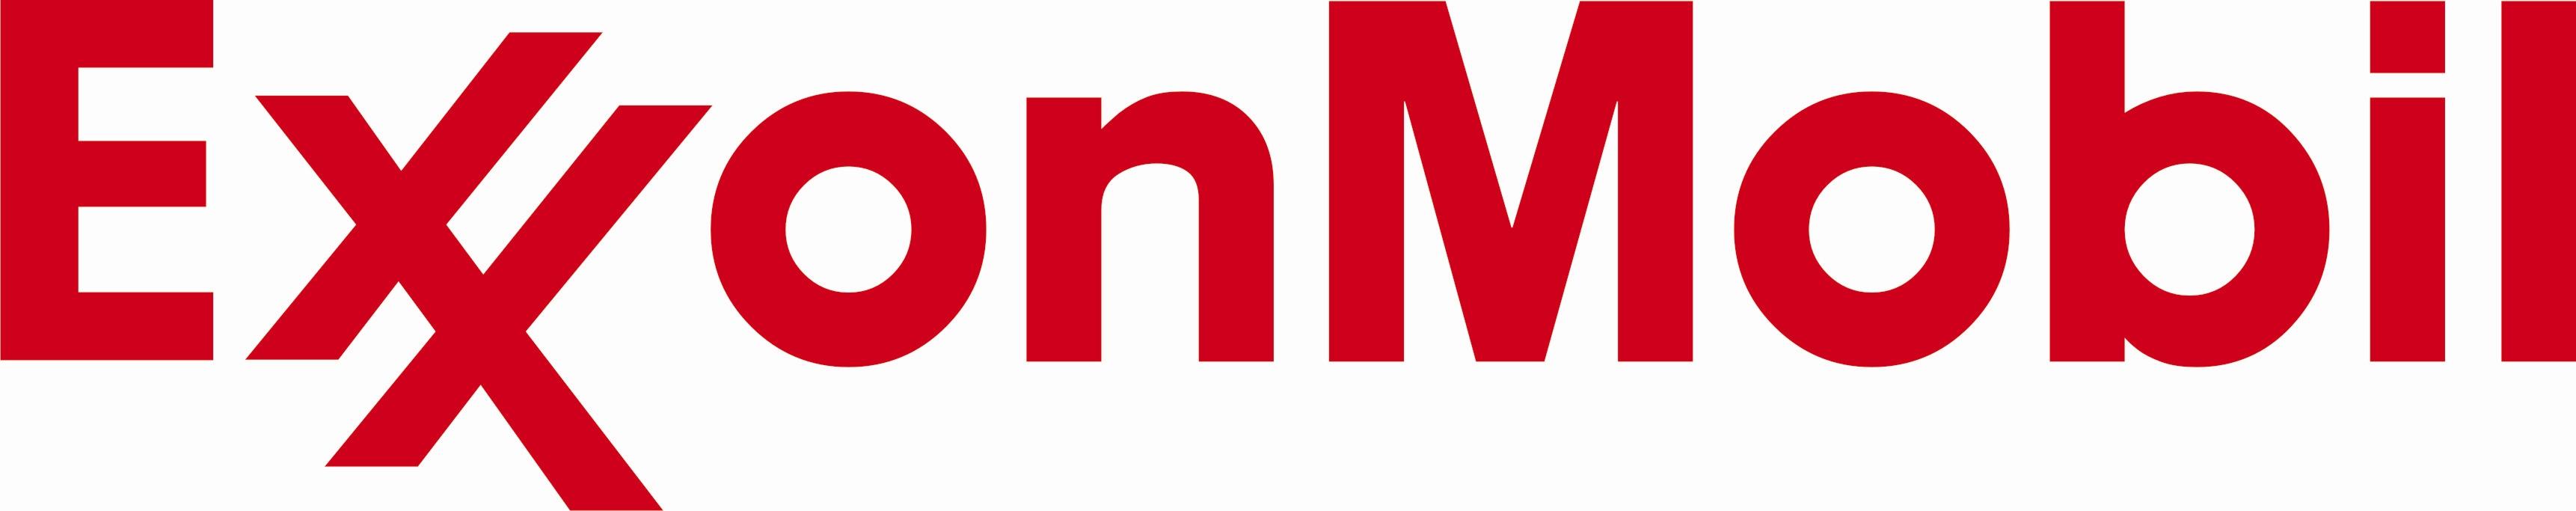 Exxonmobil Logos